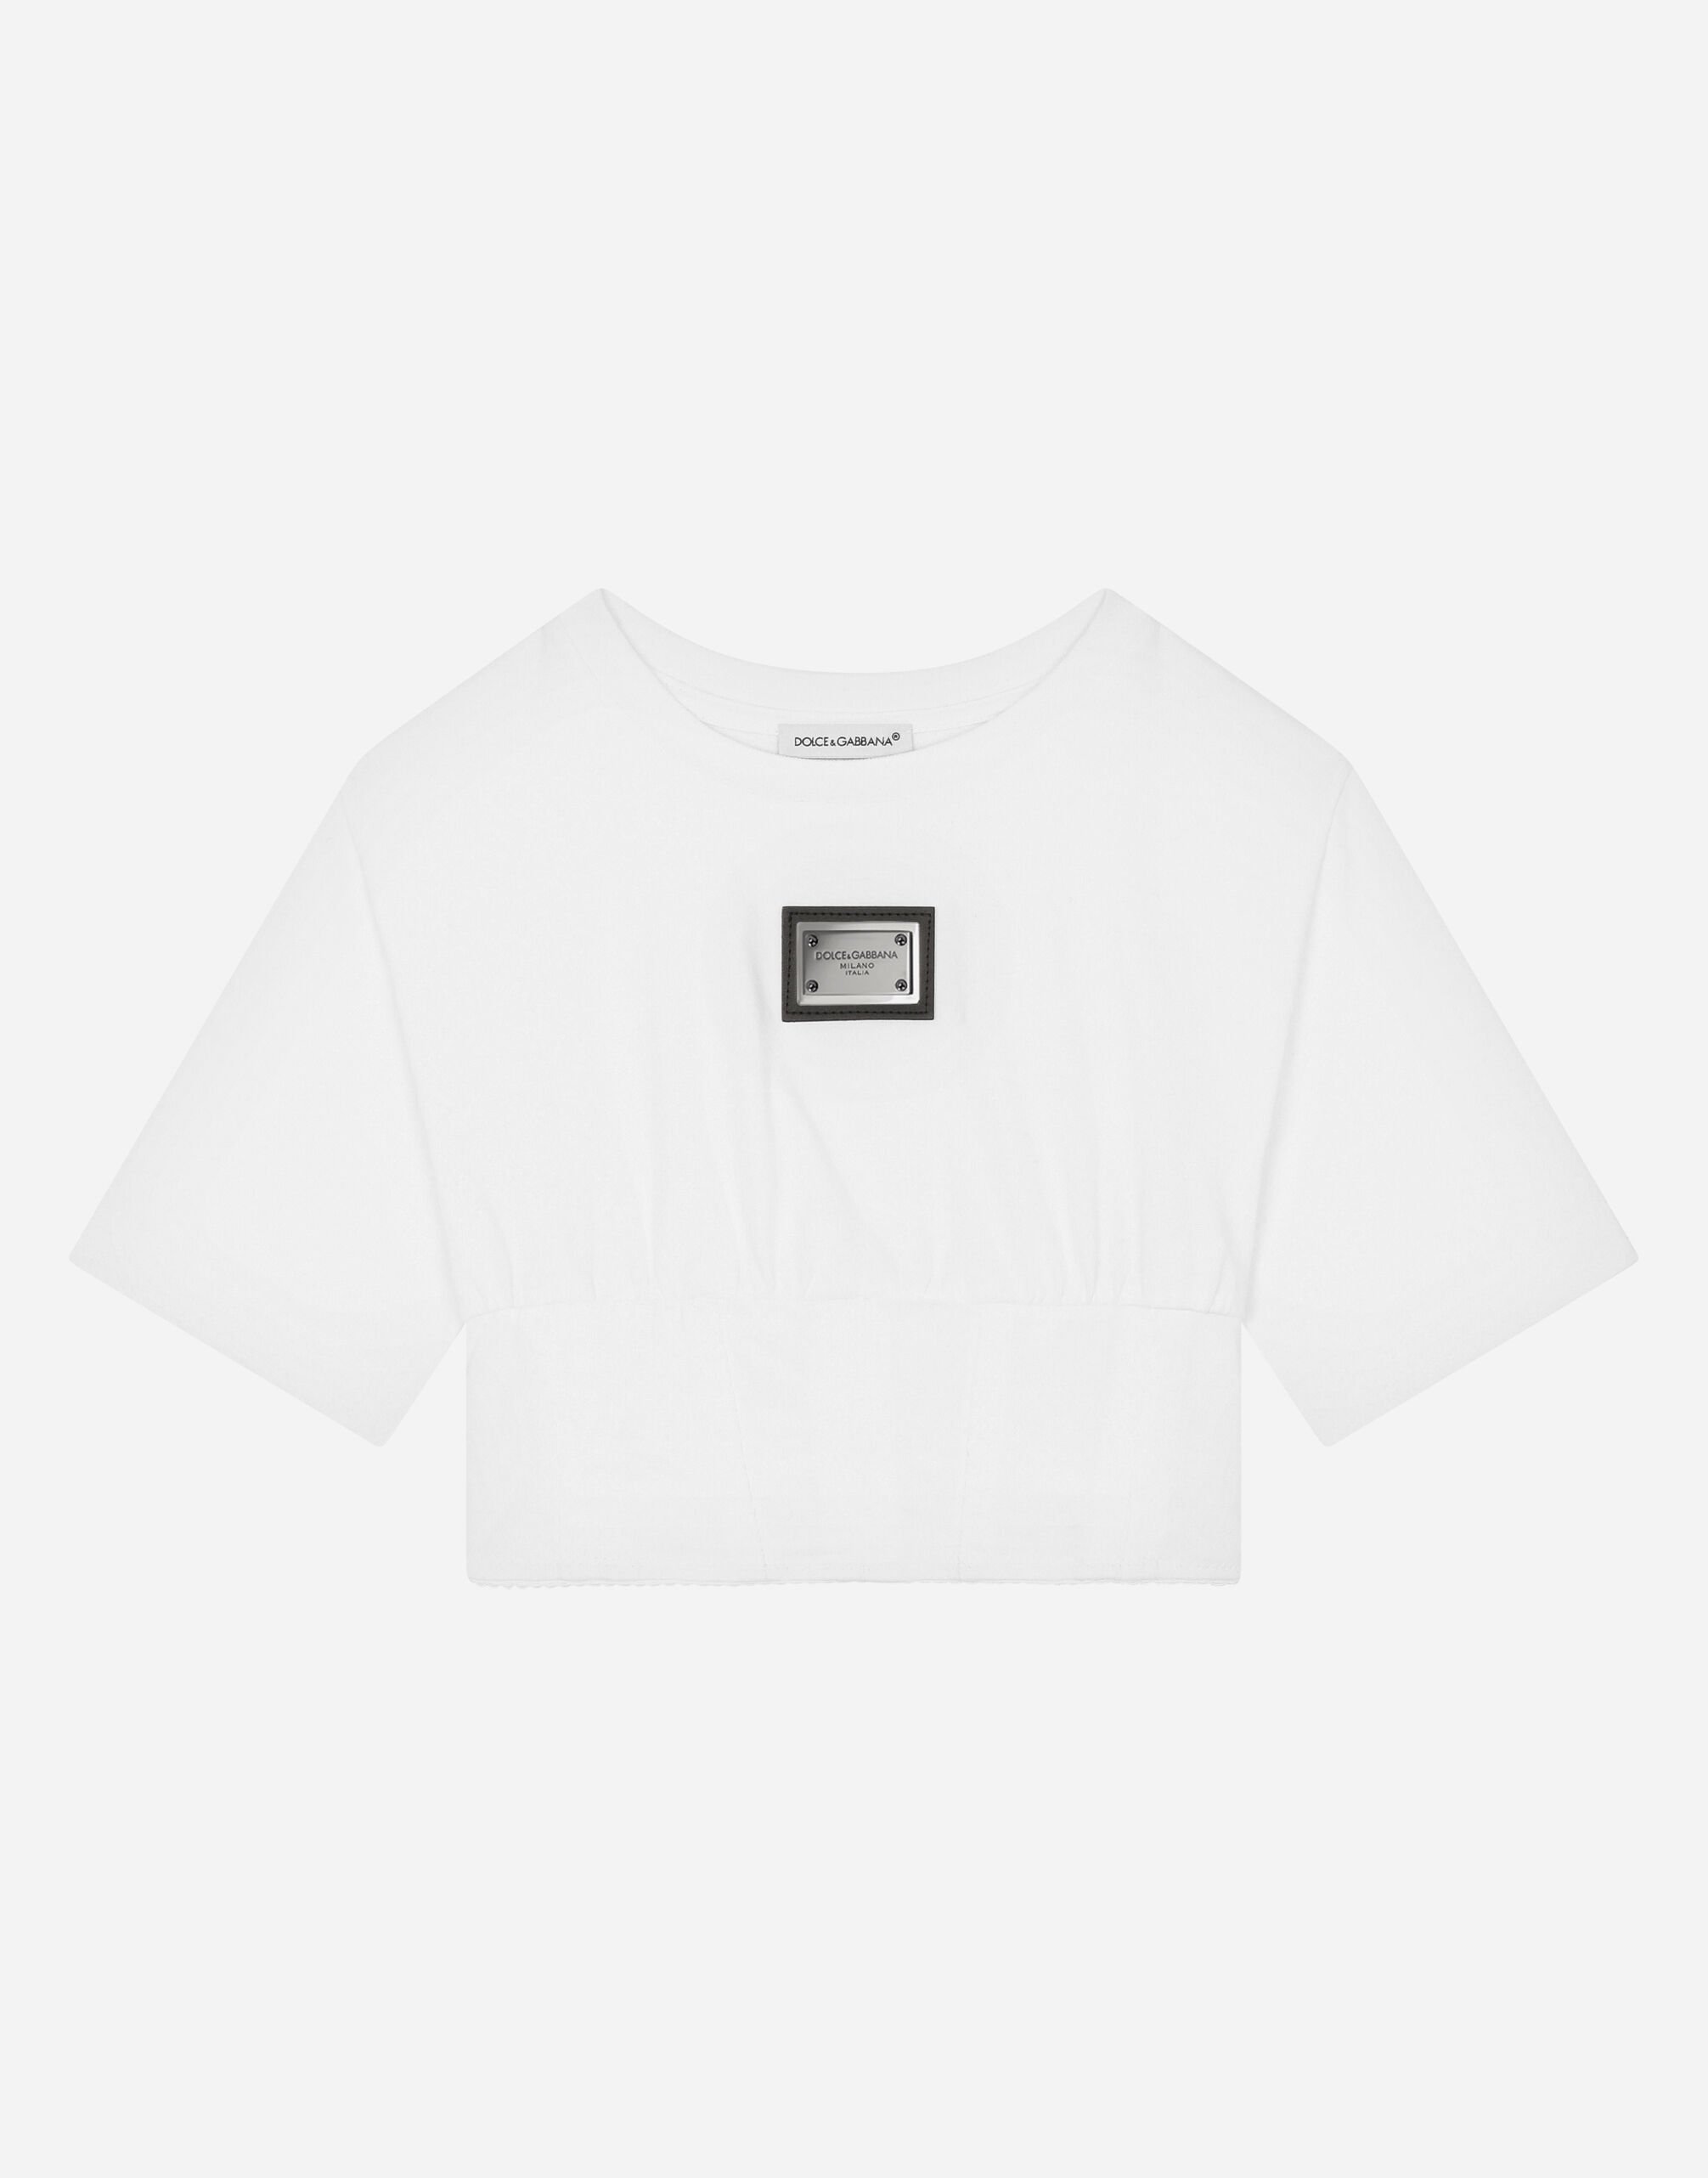 Dolce&Gabbana Jersey T-shirt with corset details White L5JTKTG7KXT